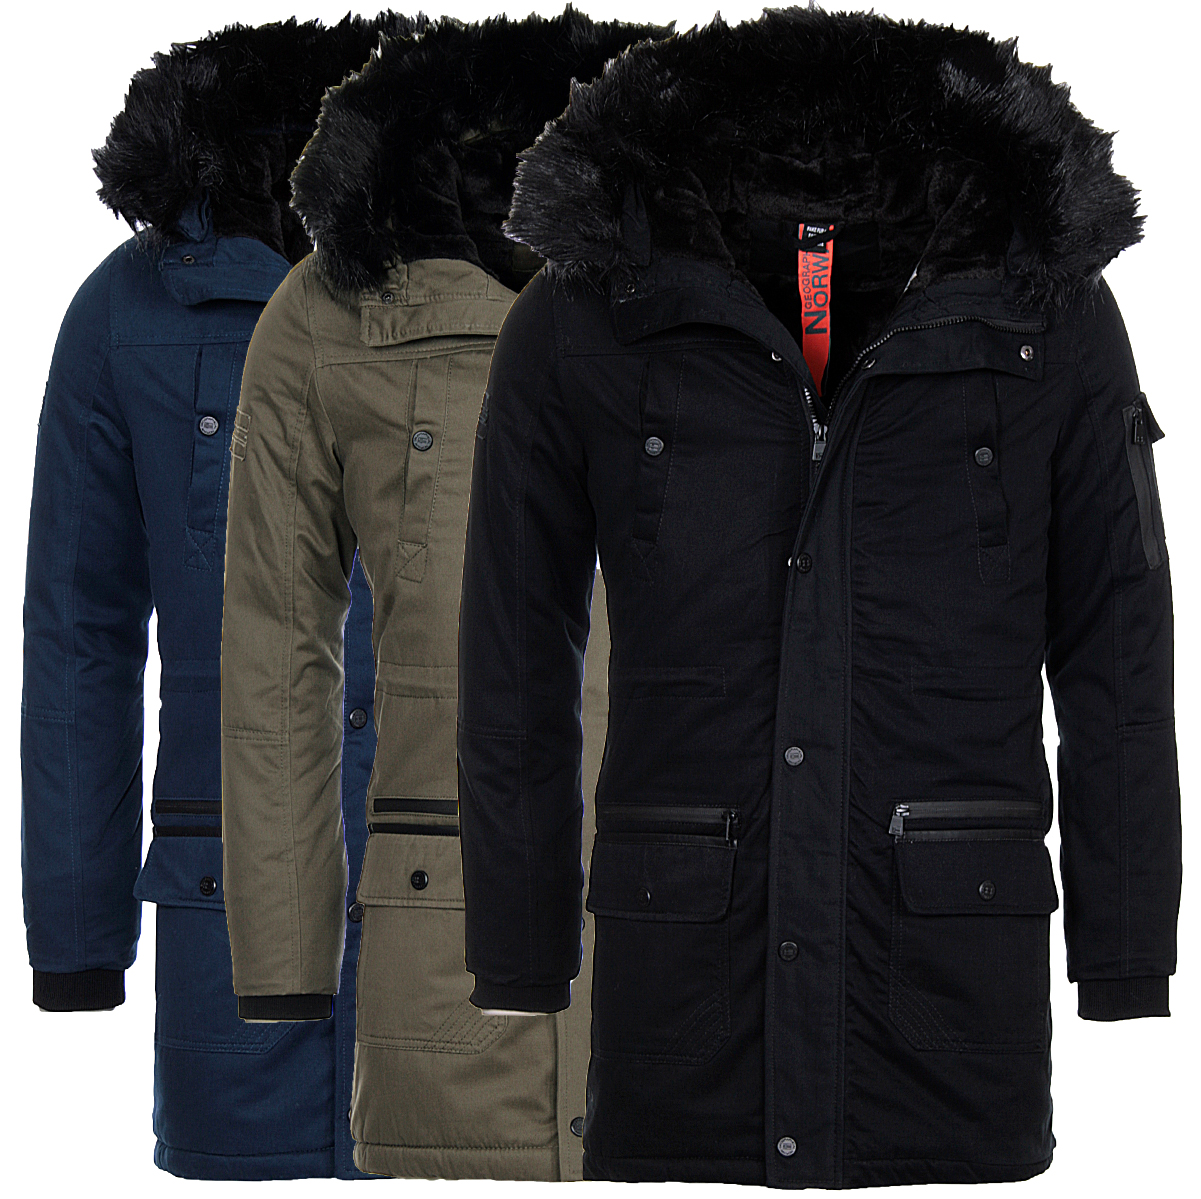 Geographical Norway Very Warm Men's Winter Jacket Parka Winter Coat ...